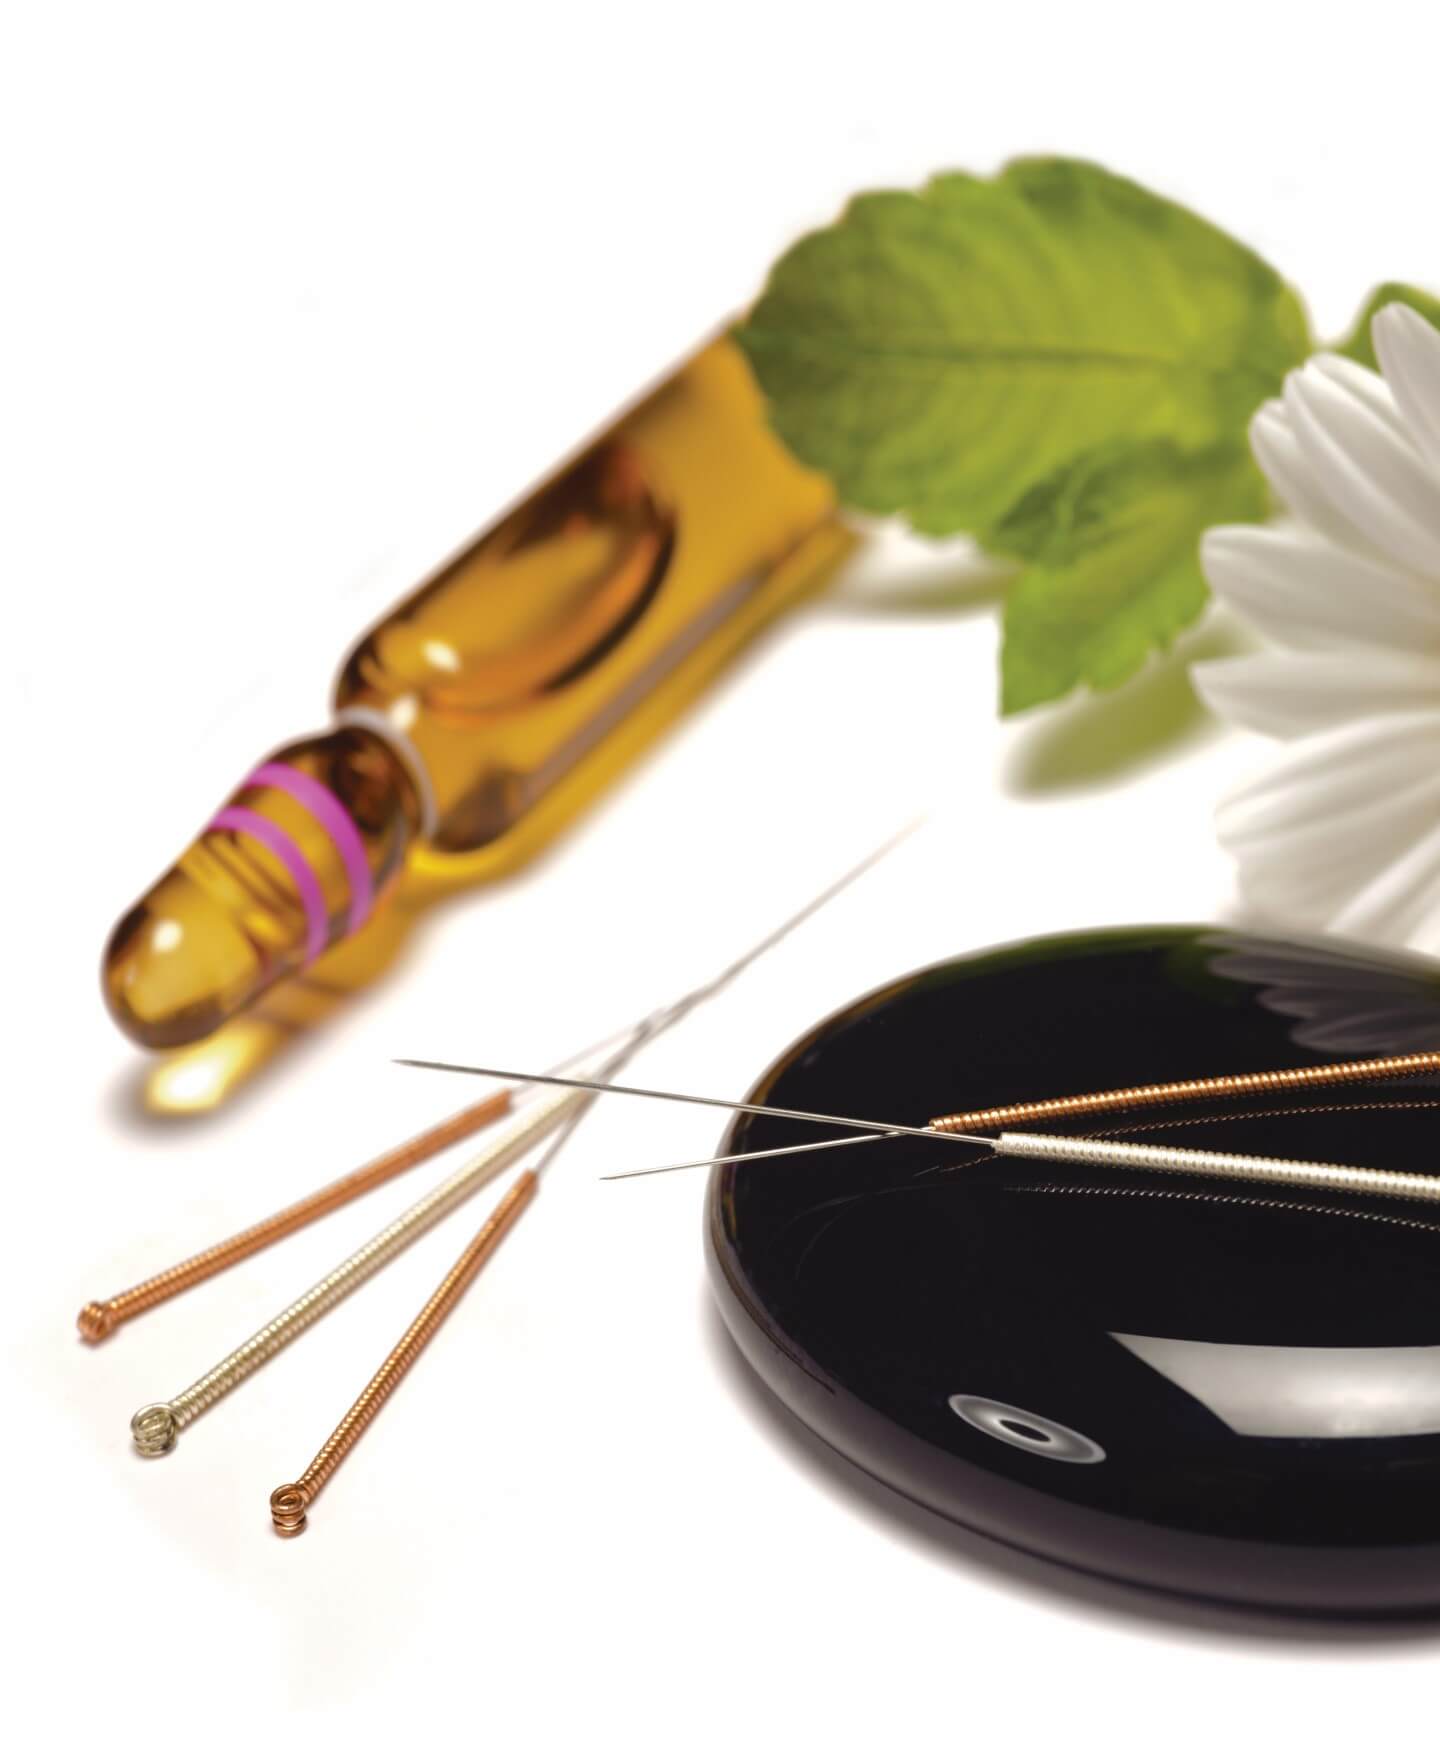 Acupuncture Services